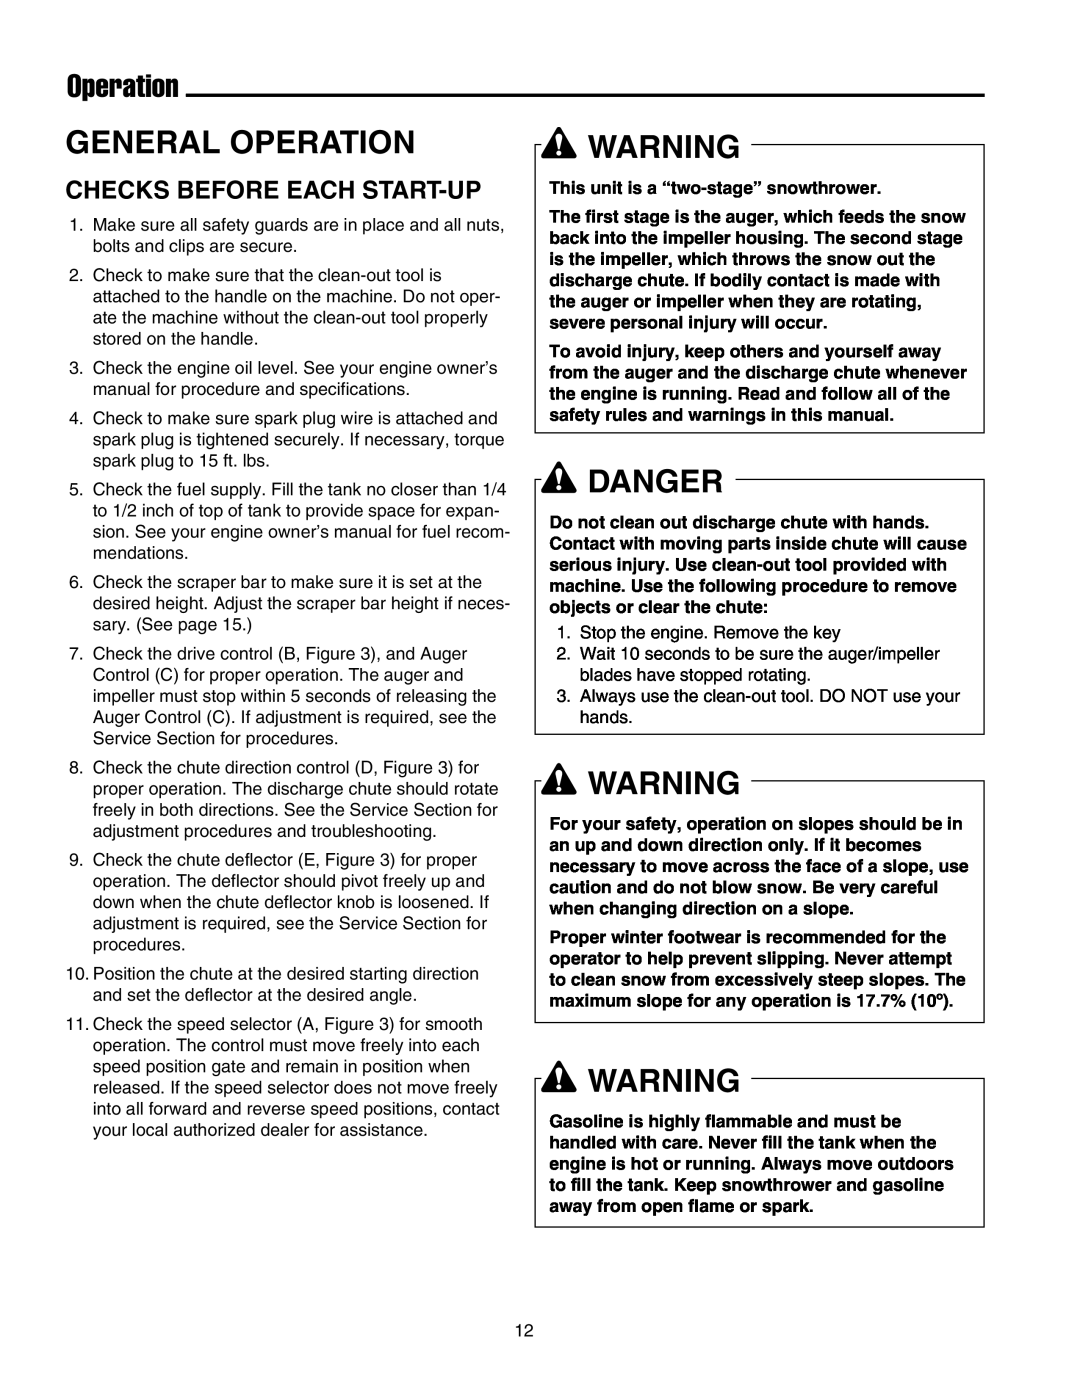 Snapper 860 manual Checks Before Each Start-Up, General Operation, Danger 